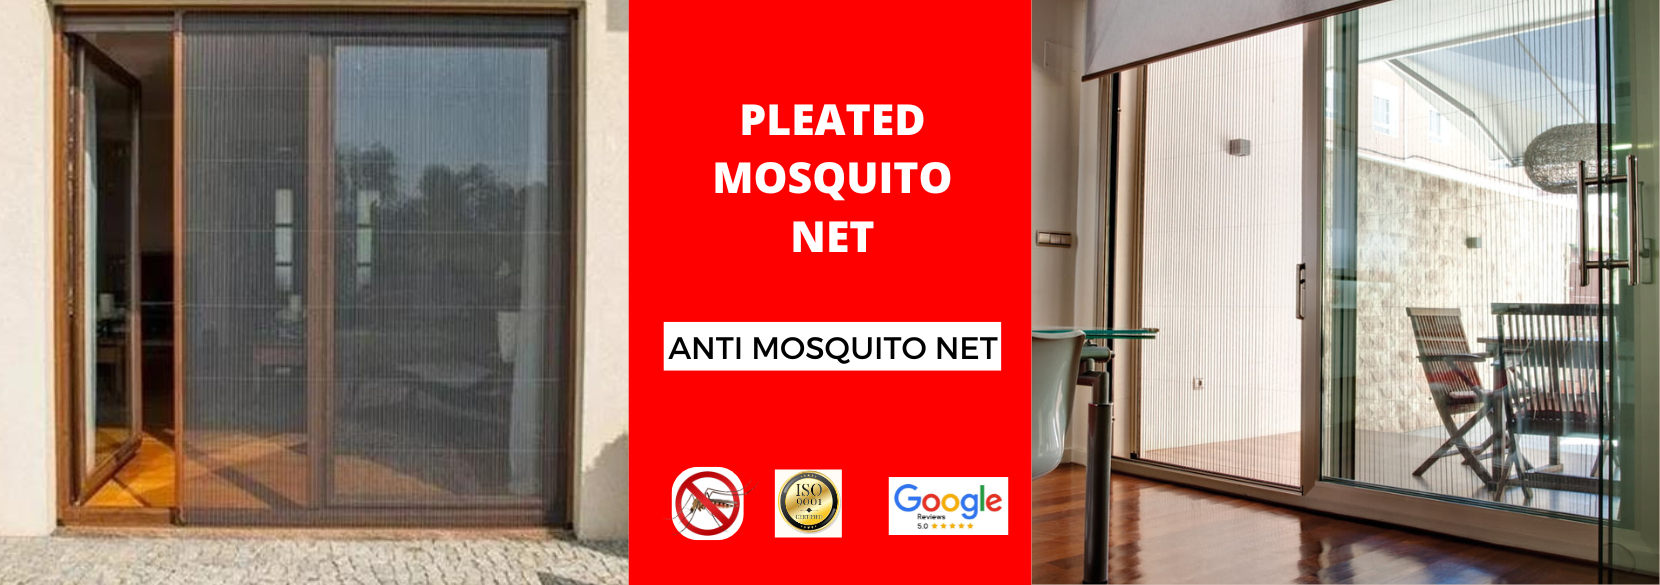 pleated mosquito net